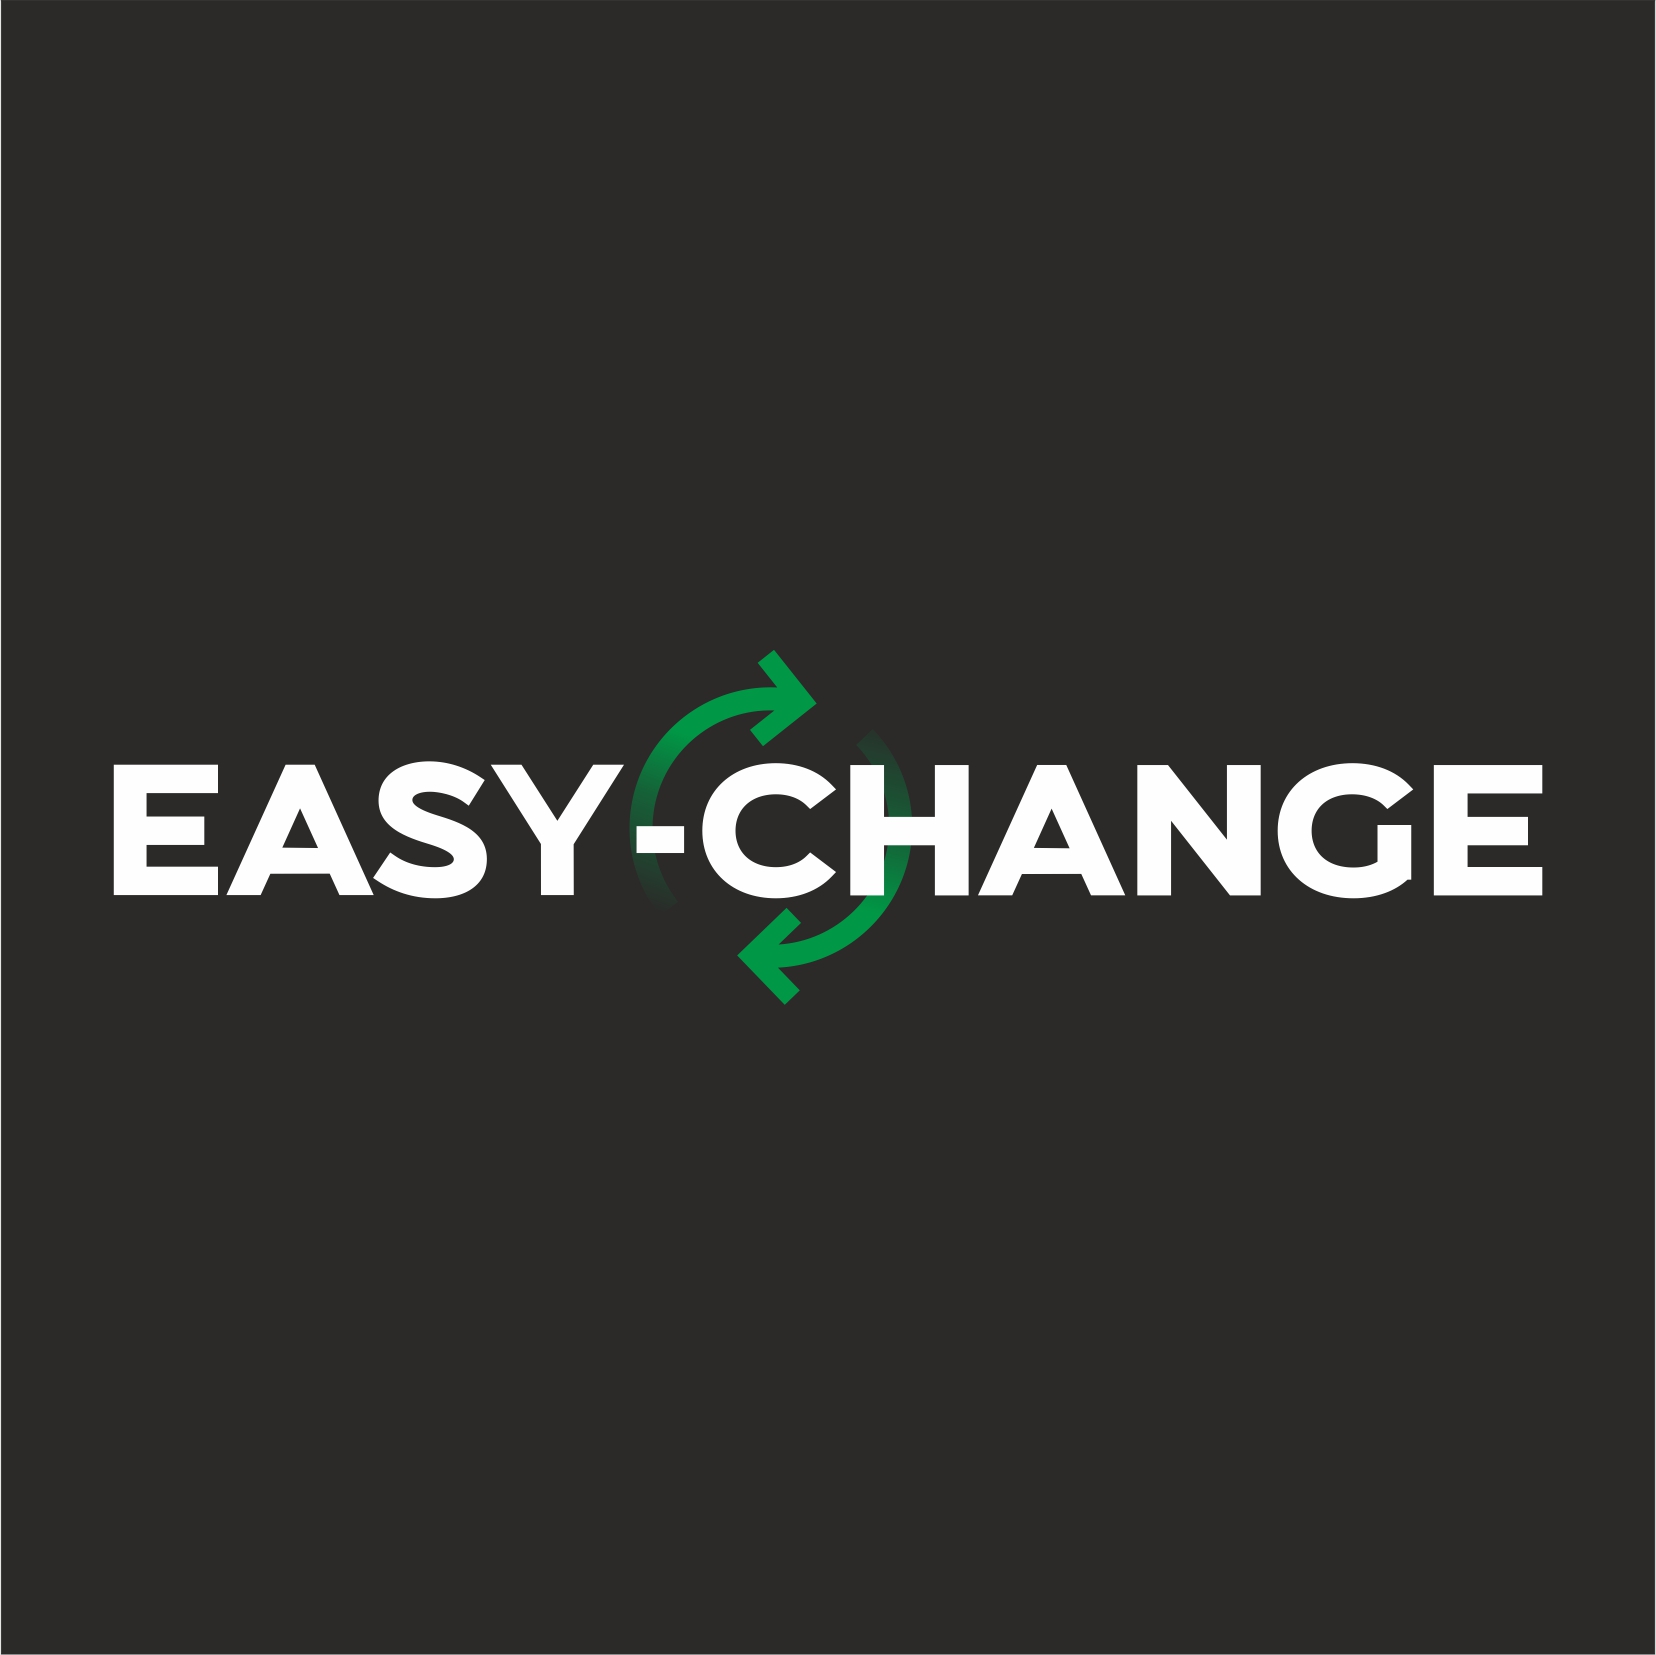 Easy-change